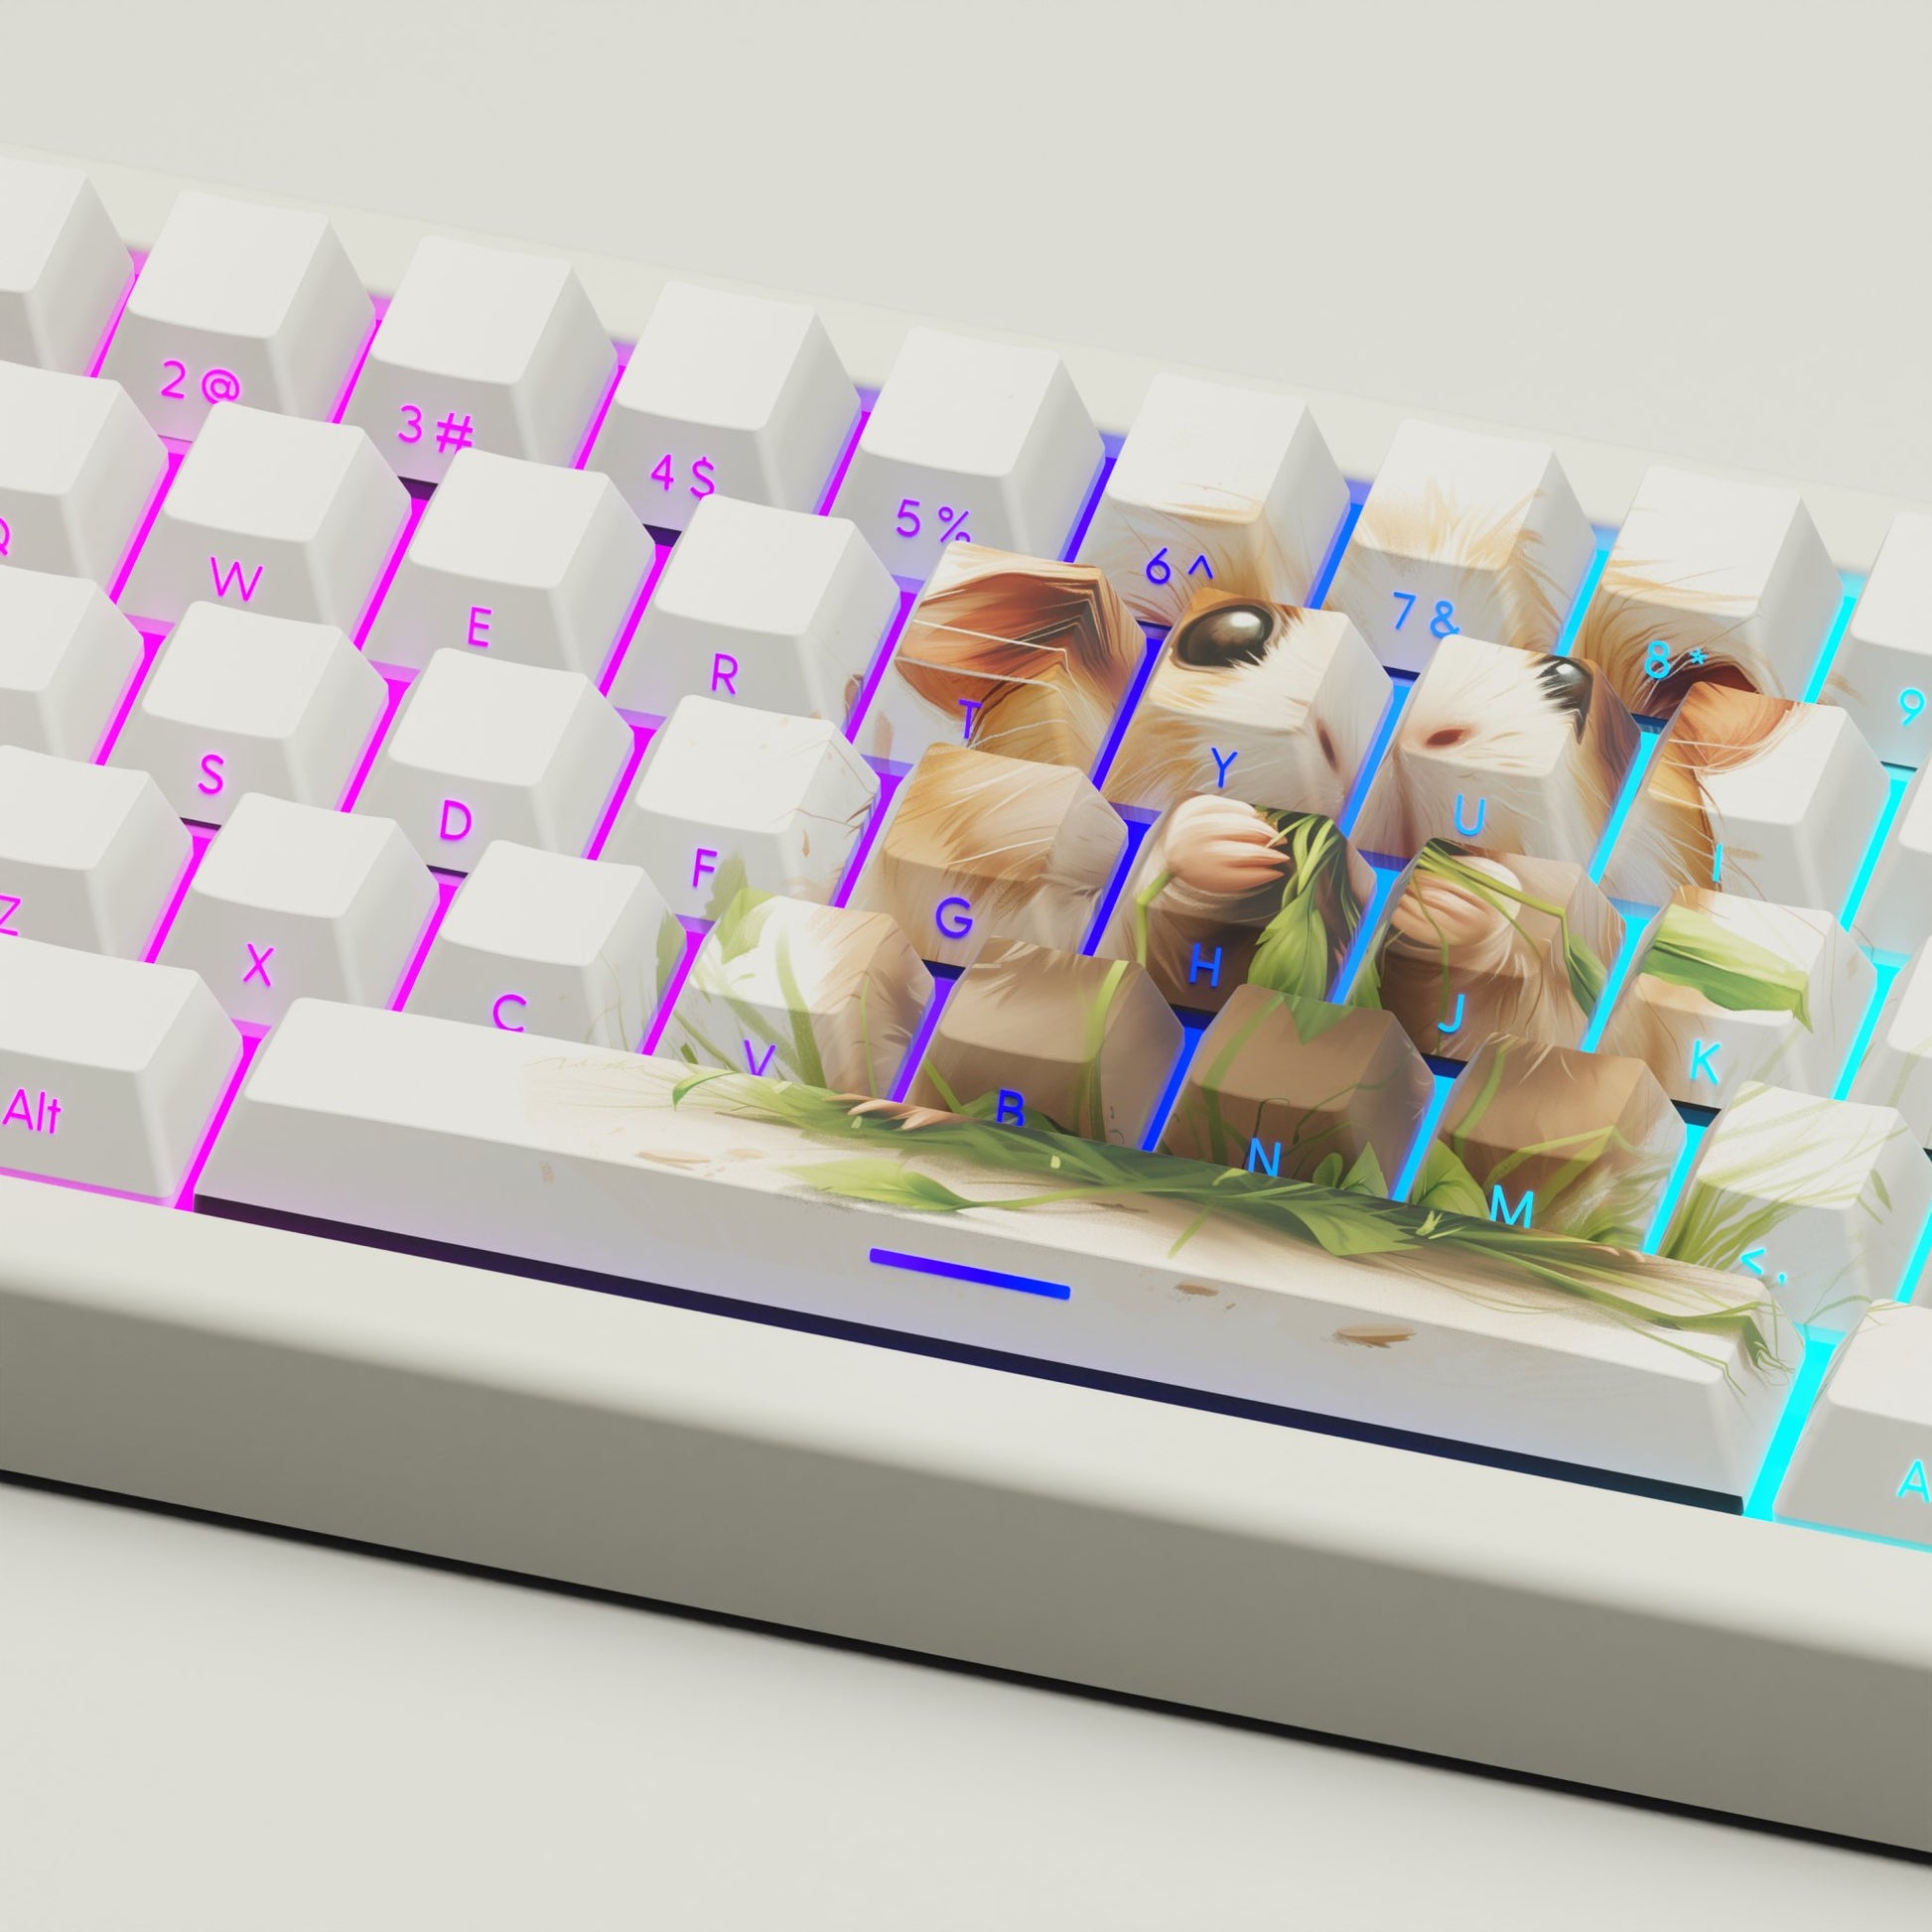 Cute Guinea Pig GMK67 Keyboard - Goblintechkeys